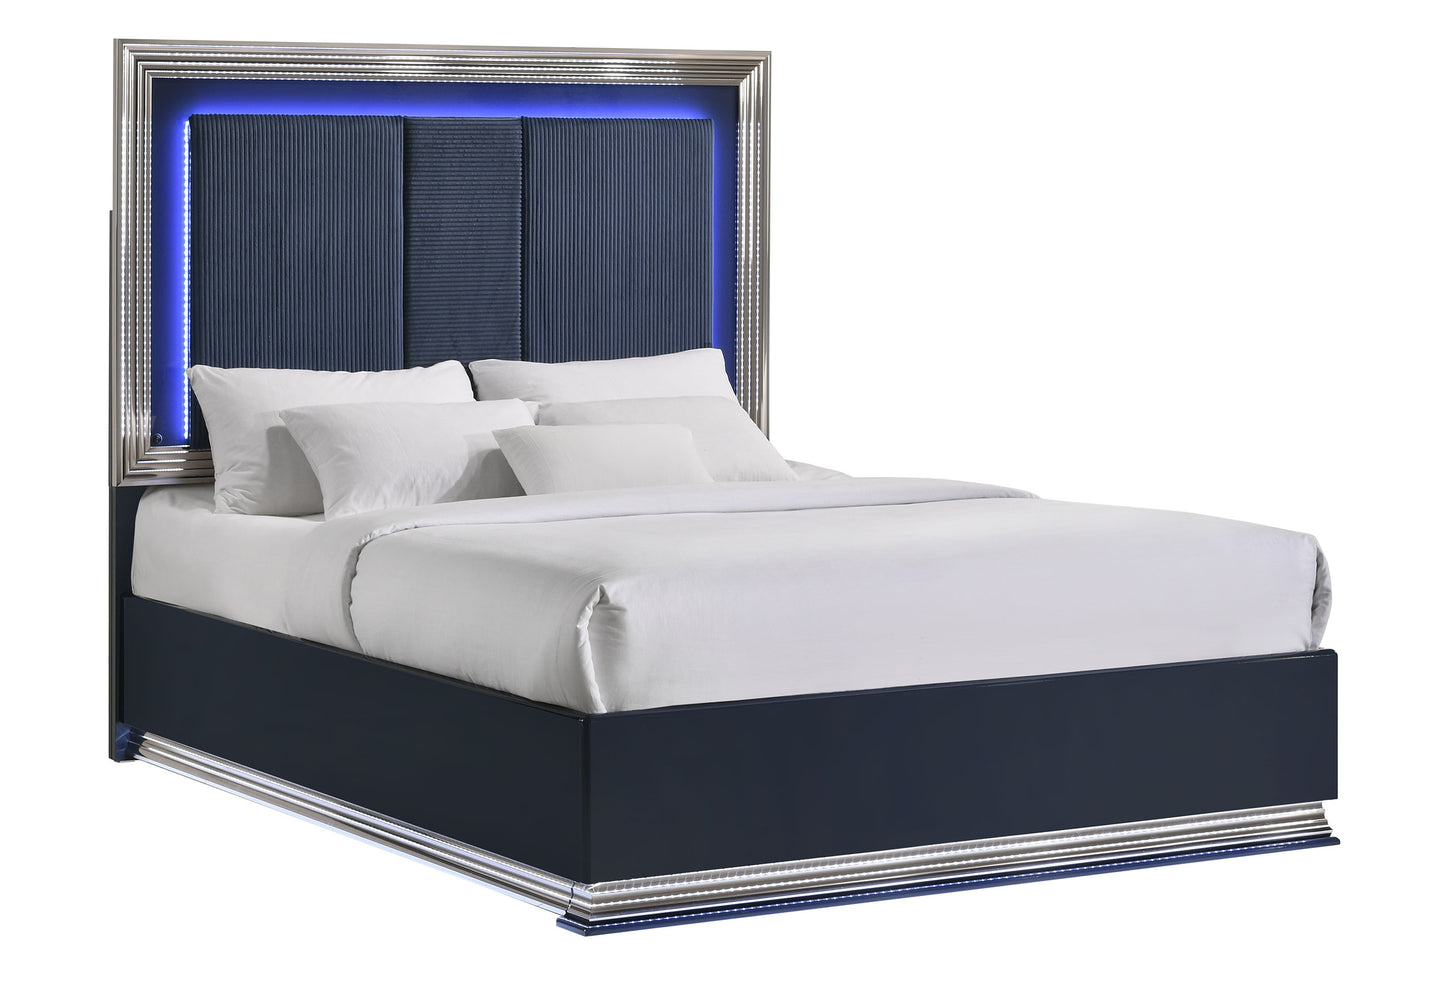 Selina 2.0 Navy Bed